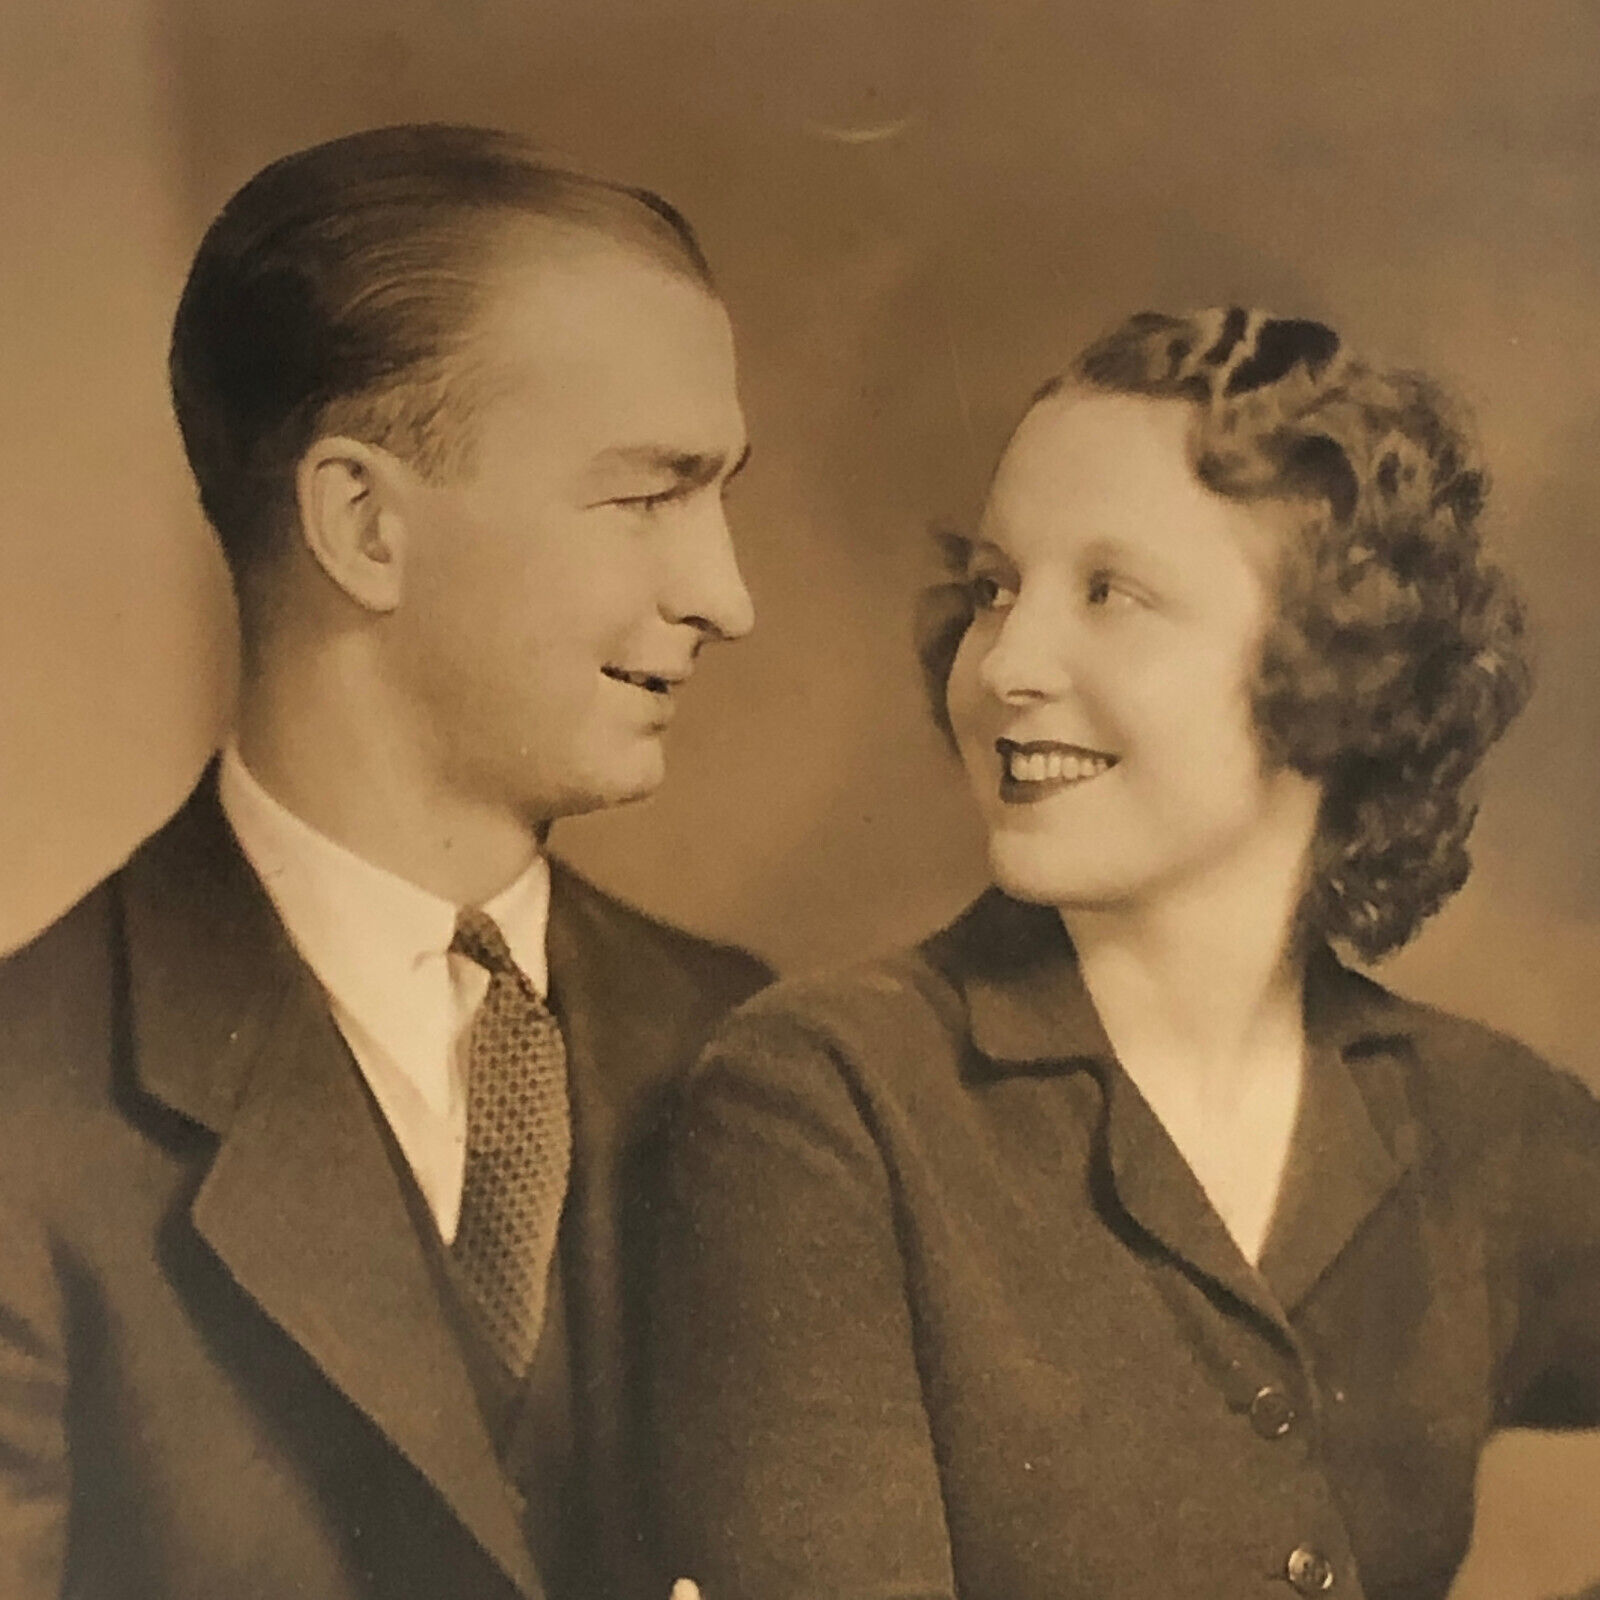 Press Photo Photograph Studebaker Car Company President Son Wedding 1934 Erskine